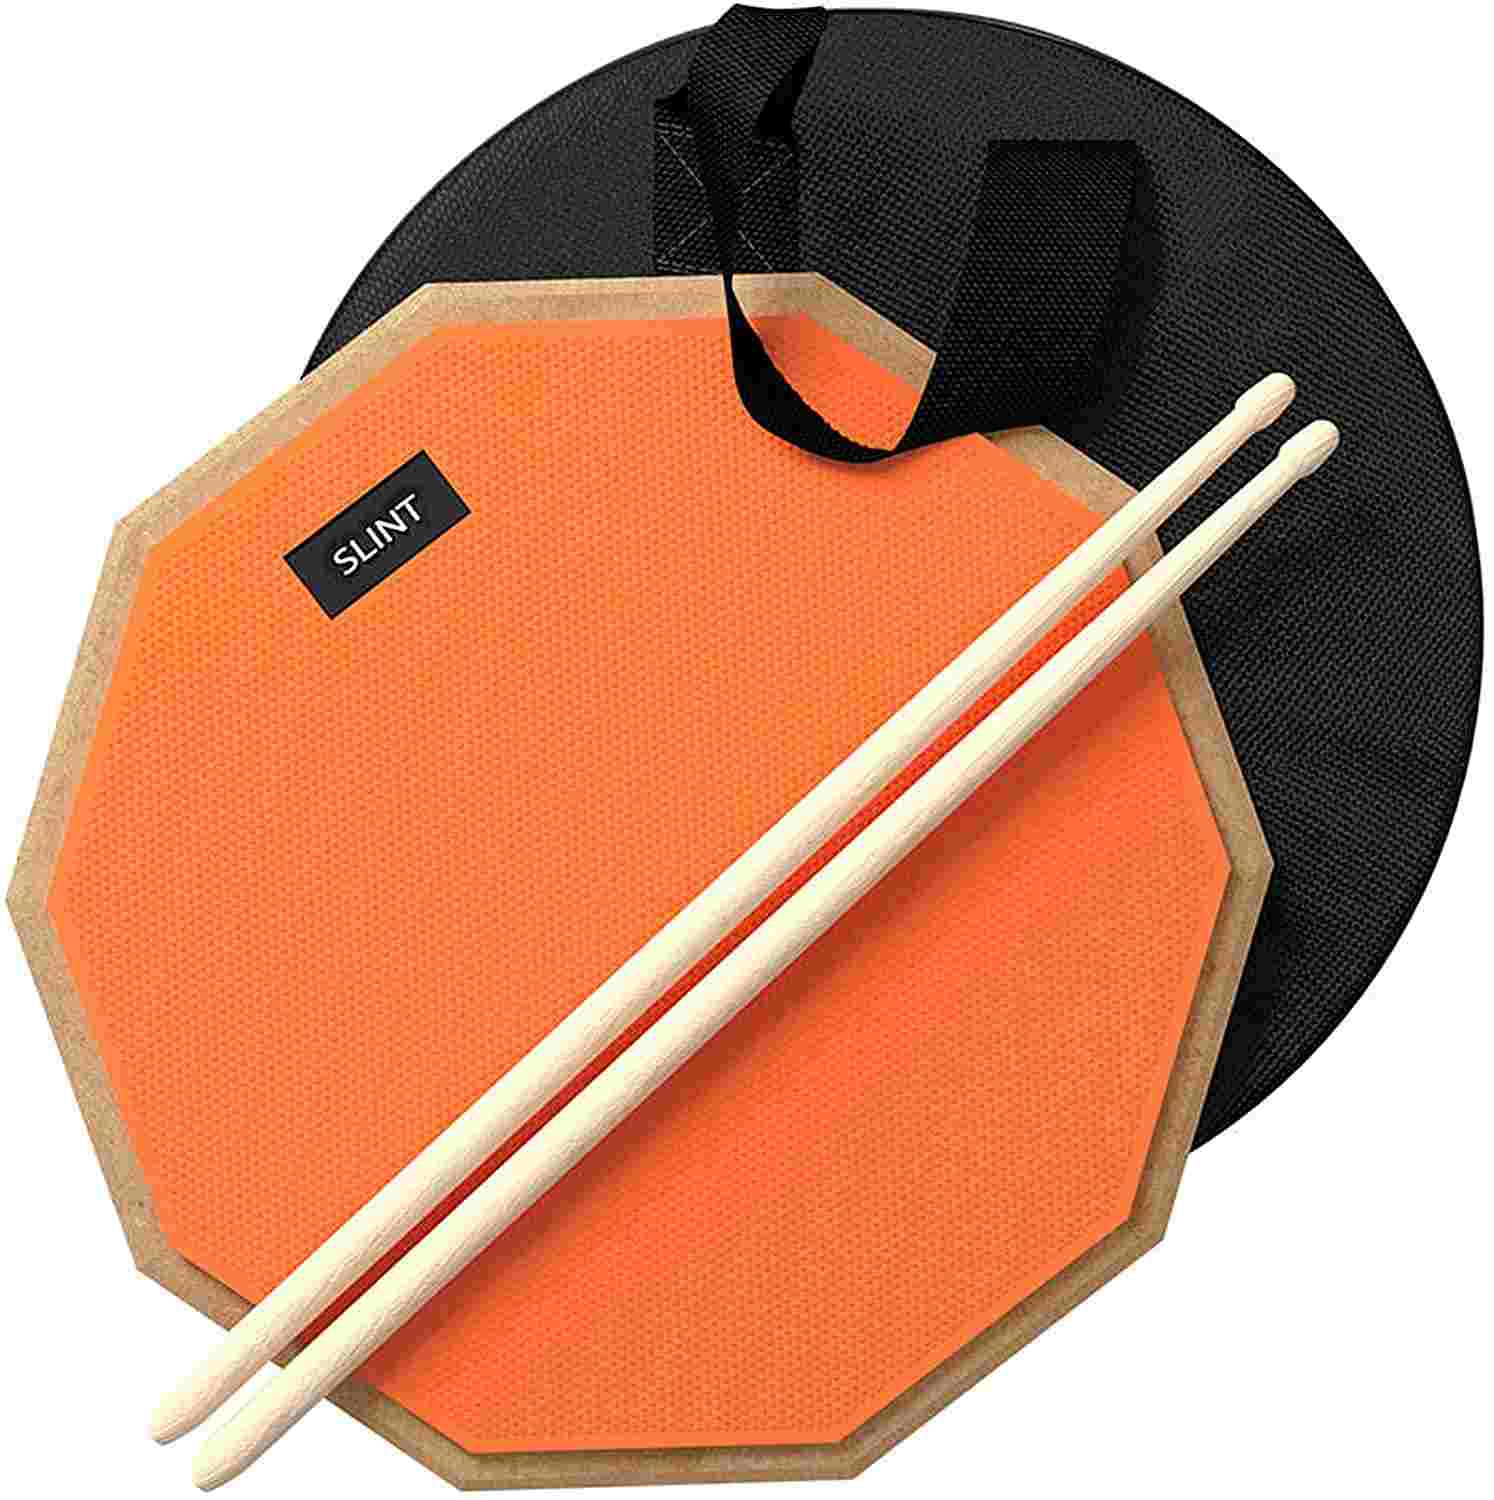 Slint - best drum practice pad